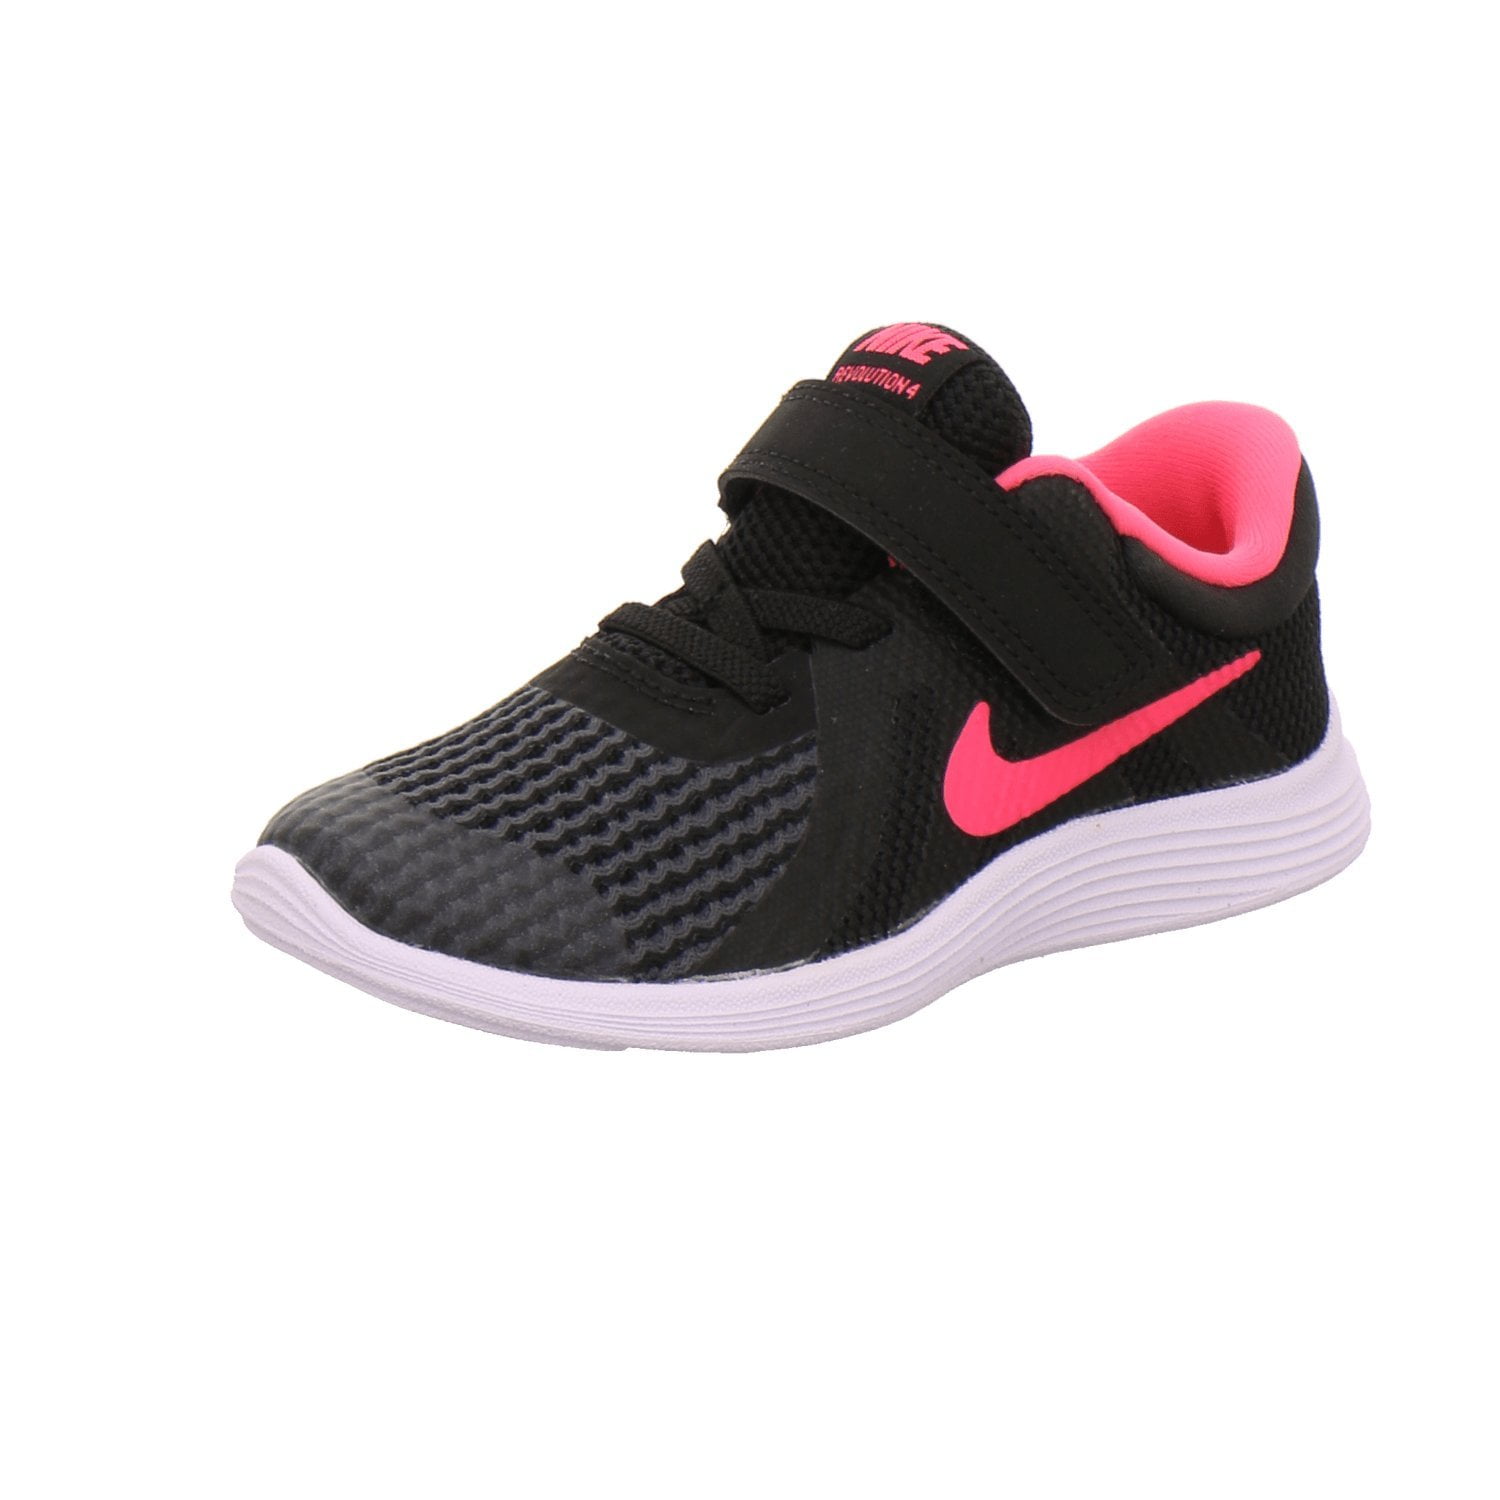 Nike Girls 4 Black/Racer Running Sneaker (9 M US Toddler) - Walmart.com